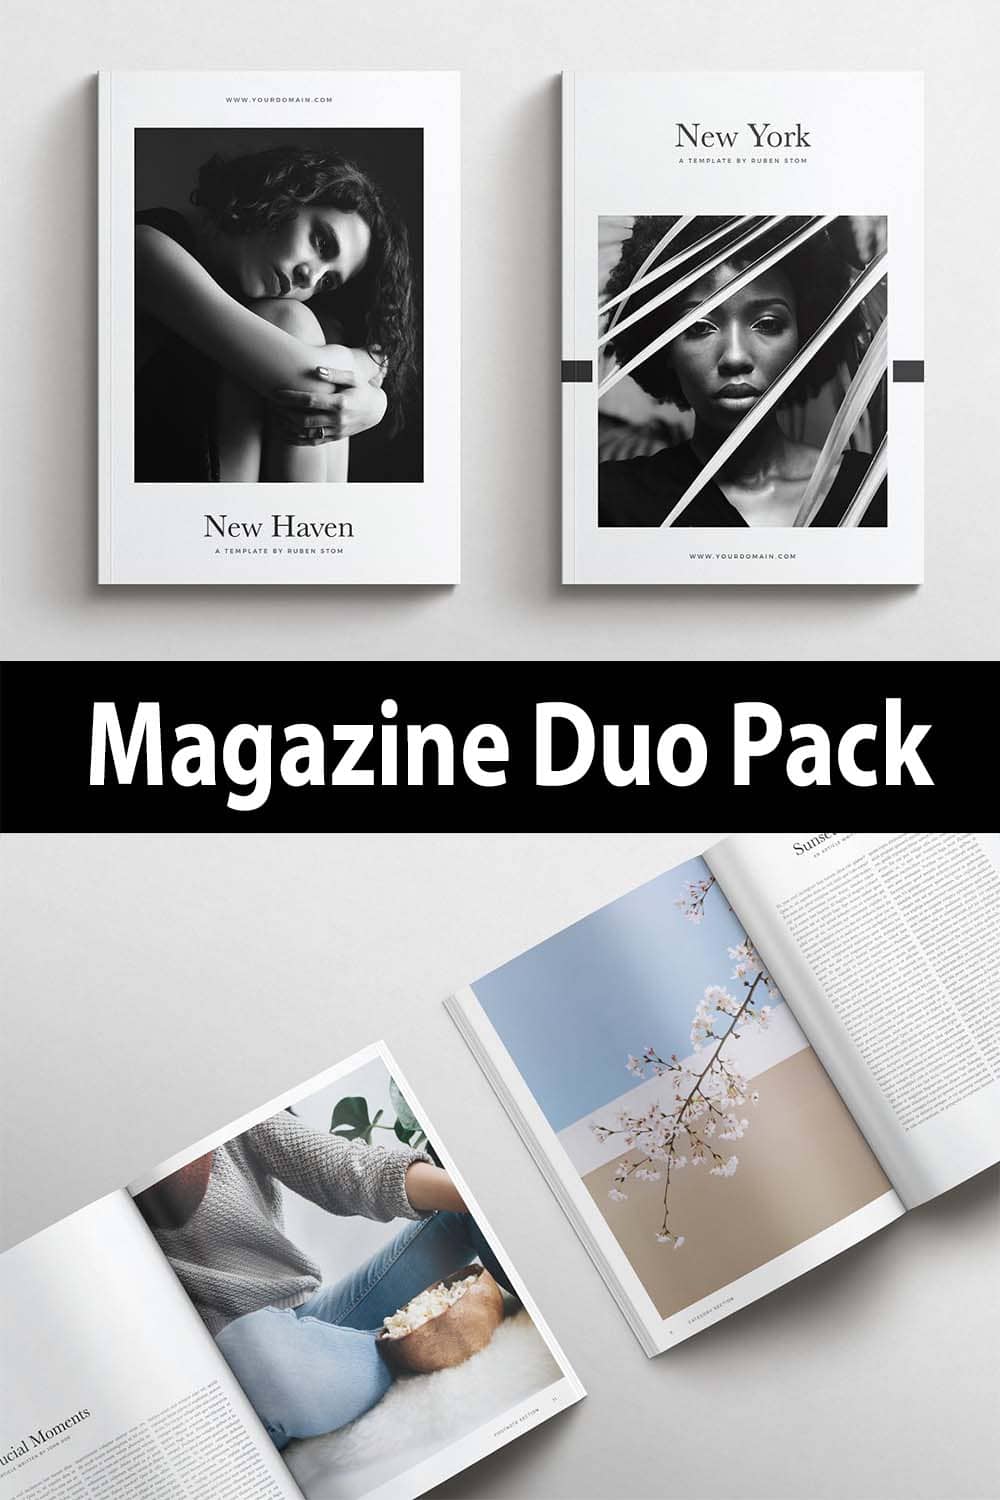 Magazine Duo Pack pinterest image.